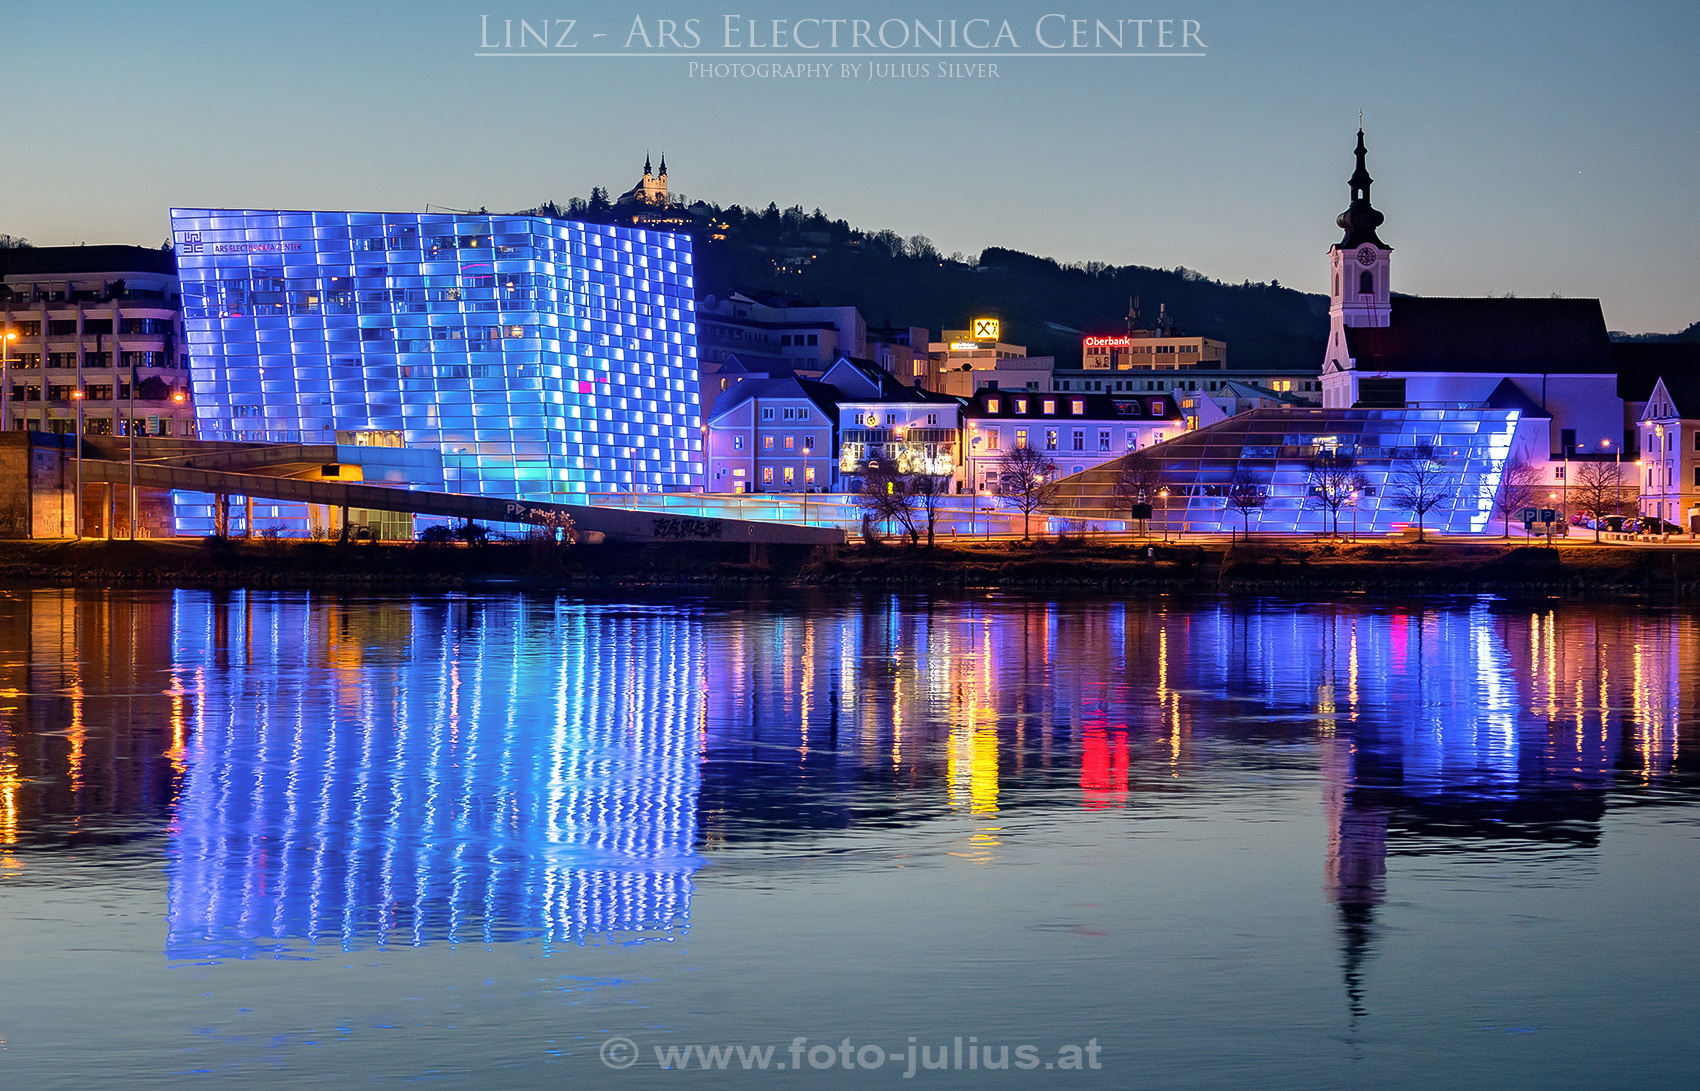 Linz_104a_Ars_Electronica_Center.jpg, 955kB